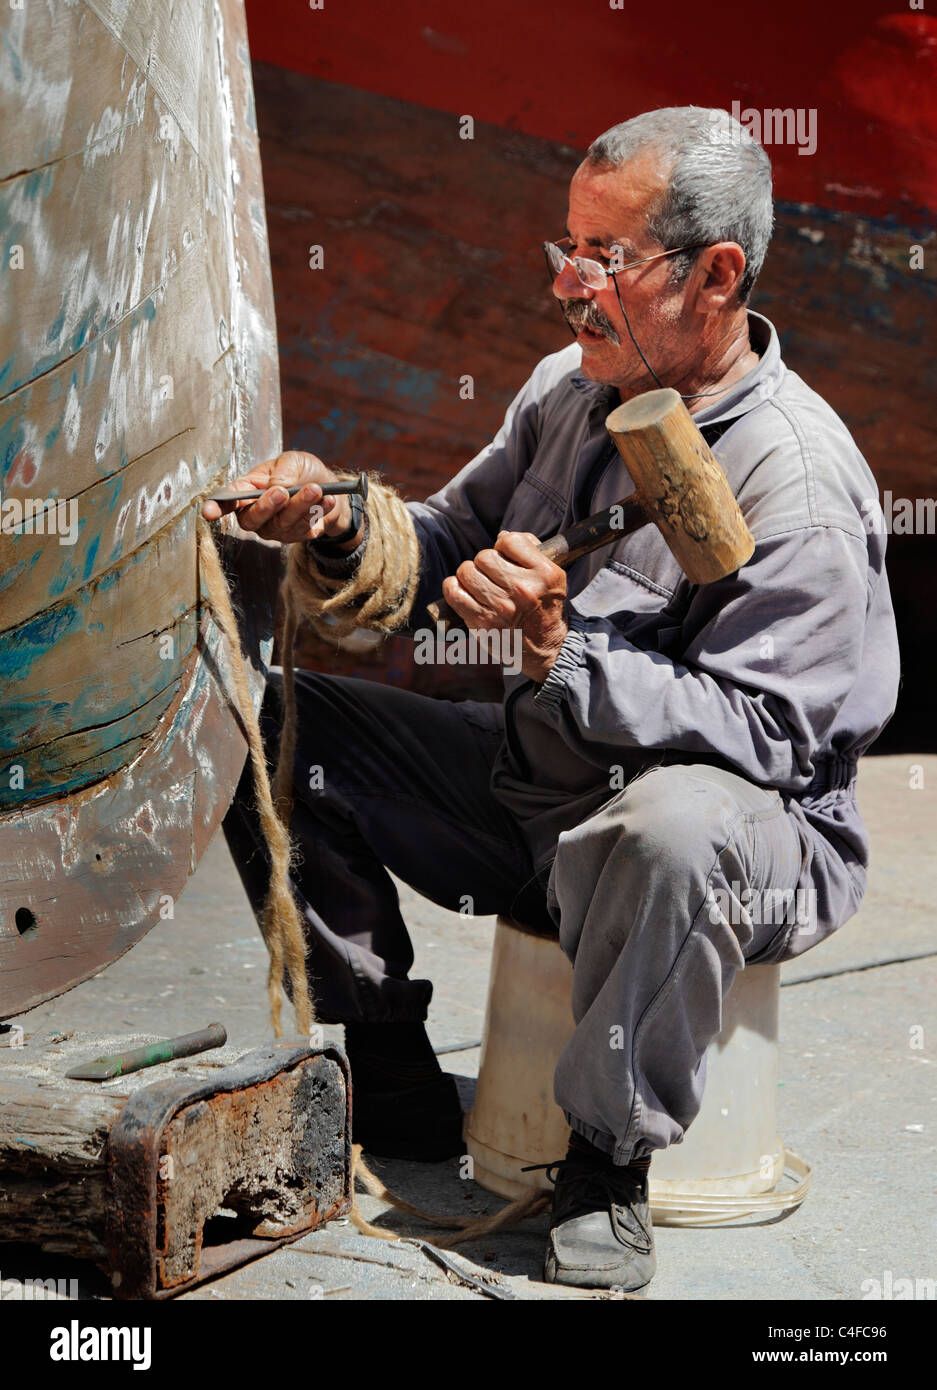 A madeiran fisherman repairing his boat, by Caulking with hemp. Stock Photo